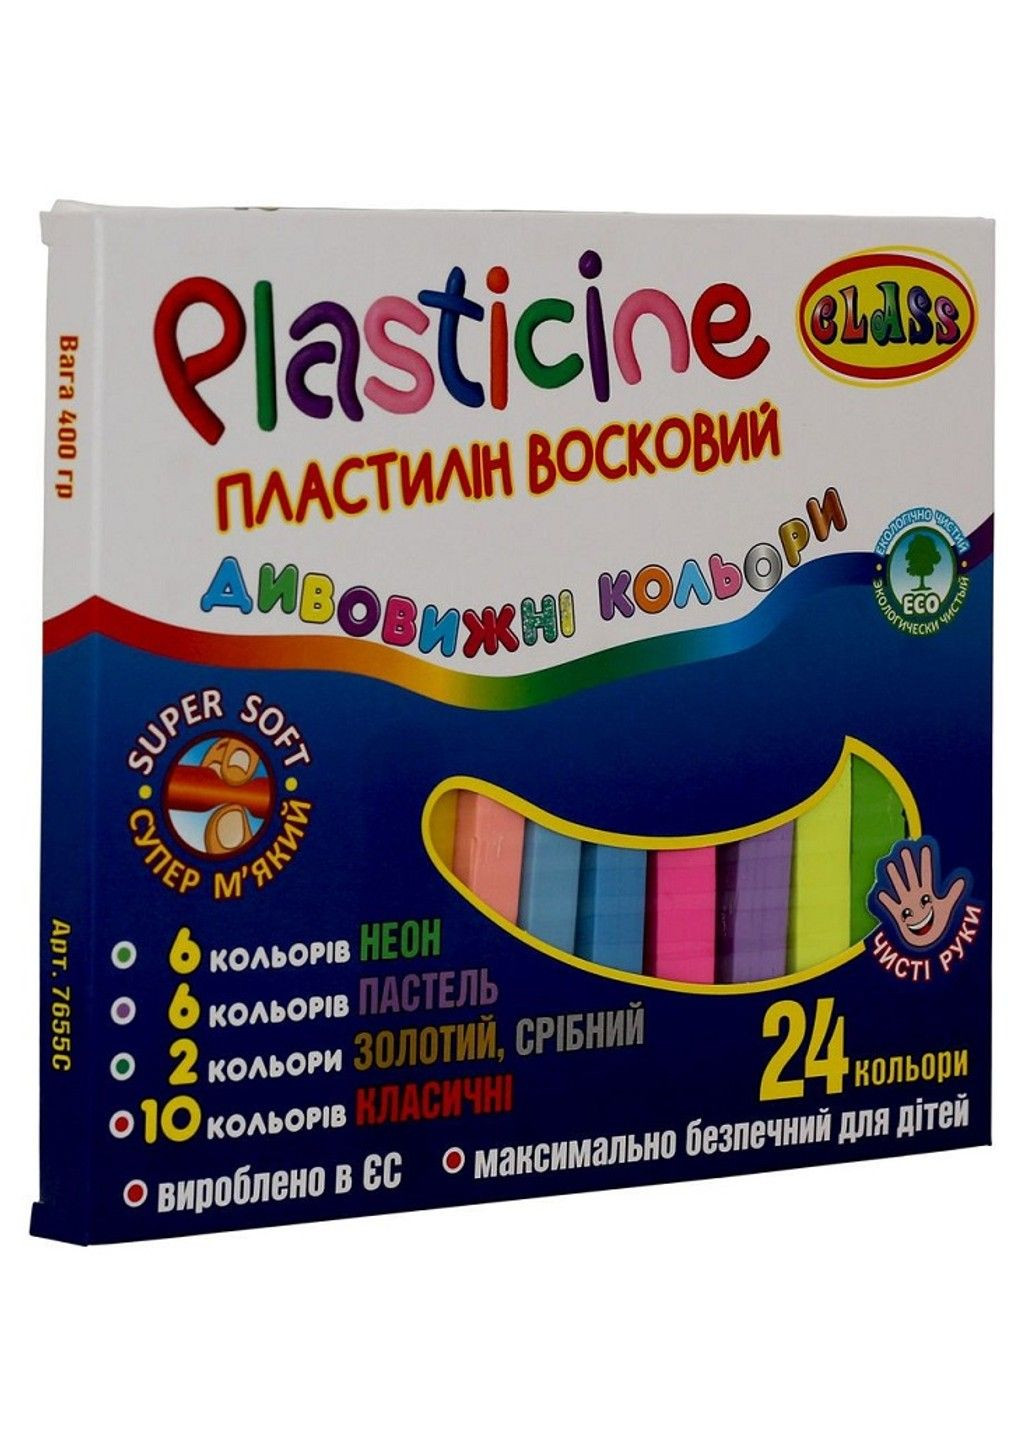 Пластилин 24 цветов 400 гр Чистые руки ЕСО, 7655, Class (287327870)